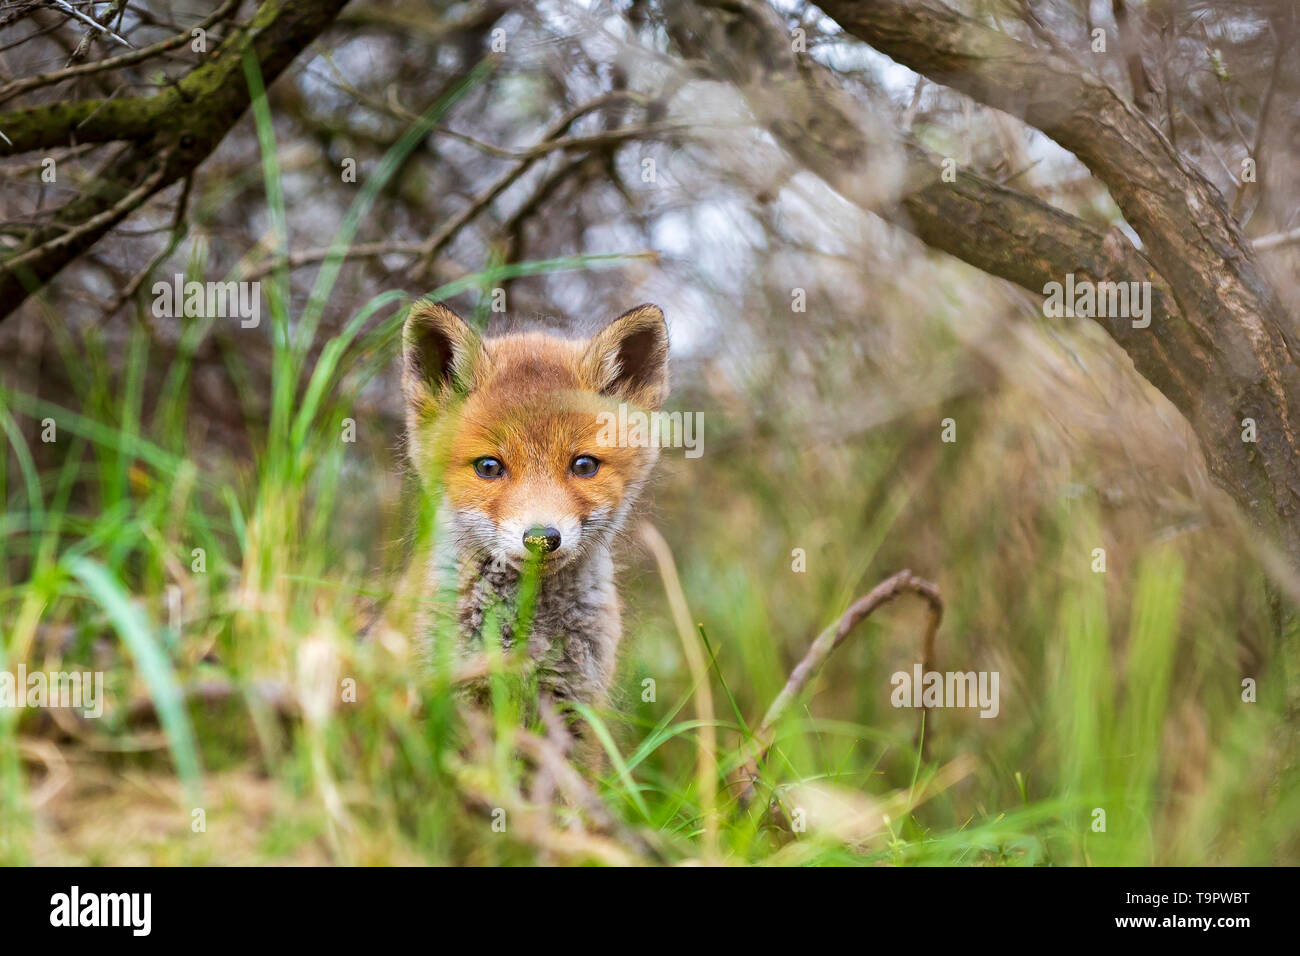 Wilden jungen Baby Red Fox Cub Vulpes vulpes erkunden den Wald, selektiven Fokus Technik verwendet. Stockfoto